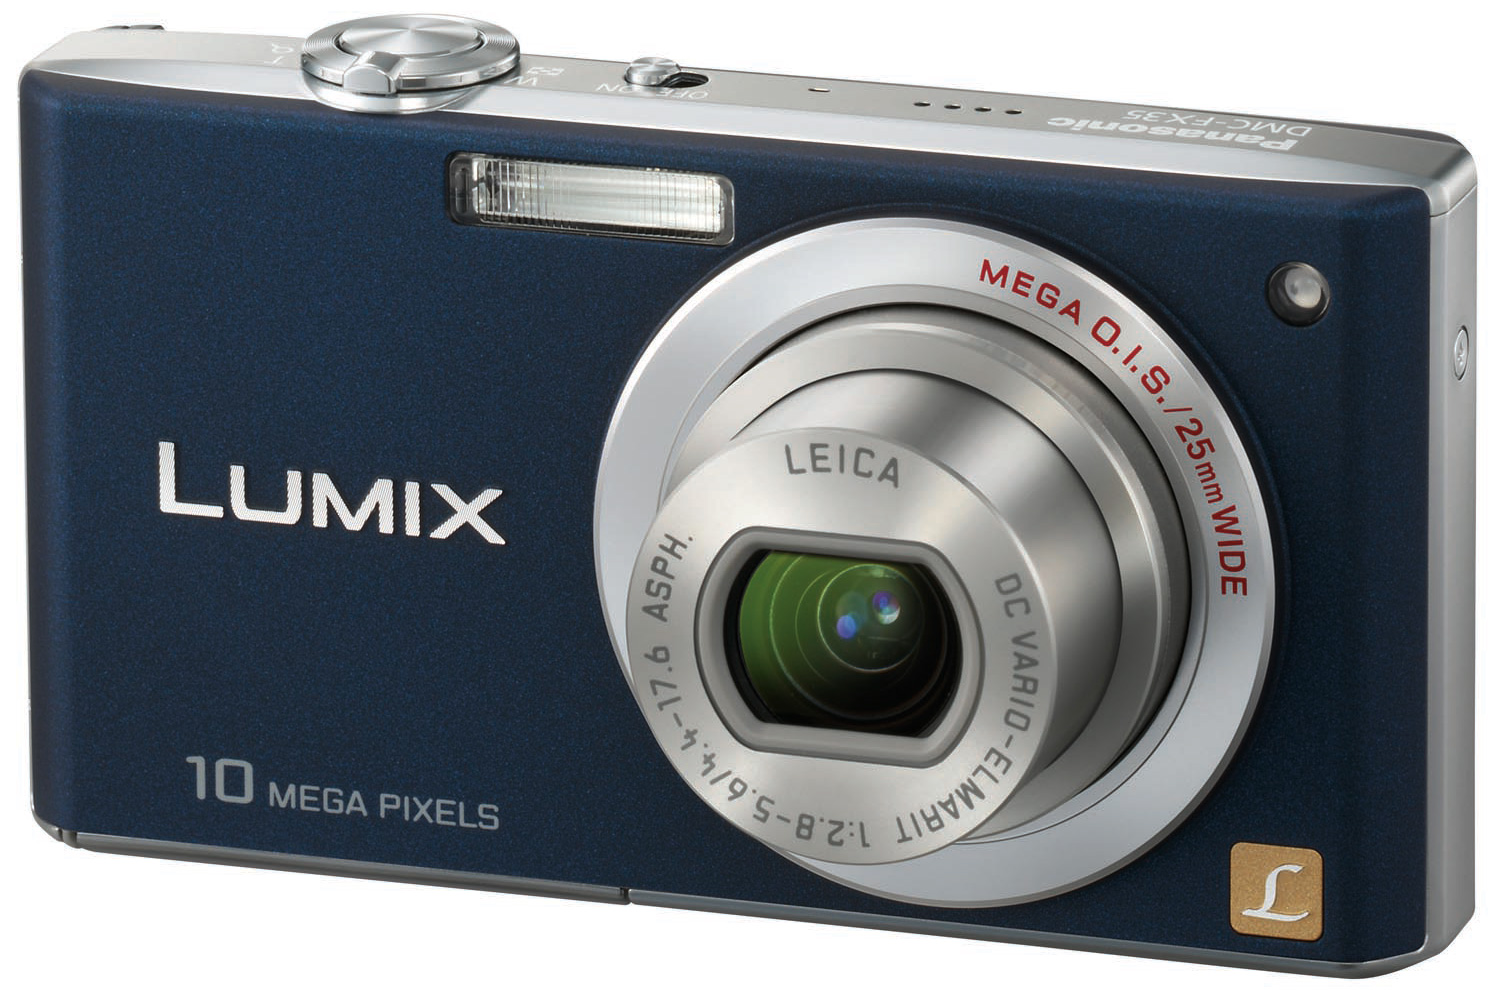 DMC-FX35 Camara digital Panasonic-LUMIX Repuestos y accesorios